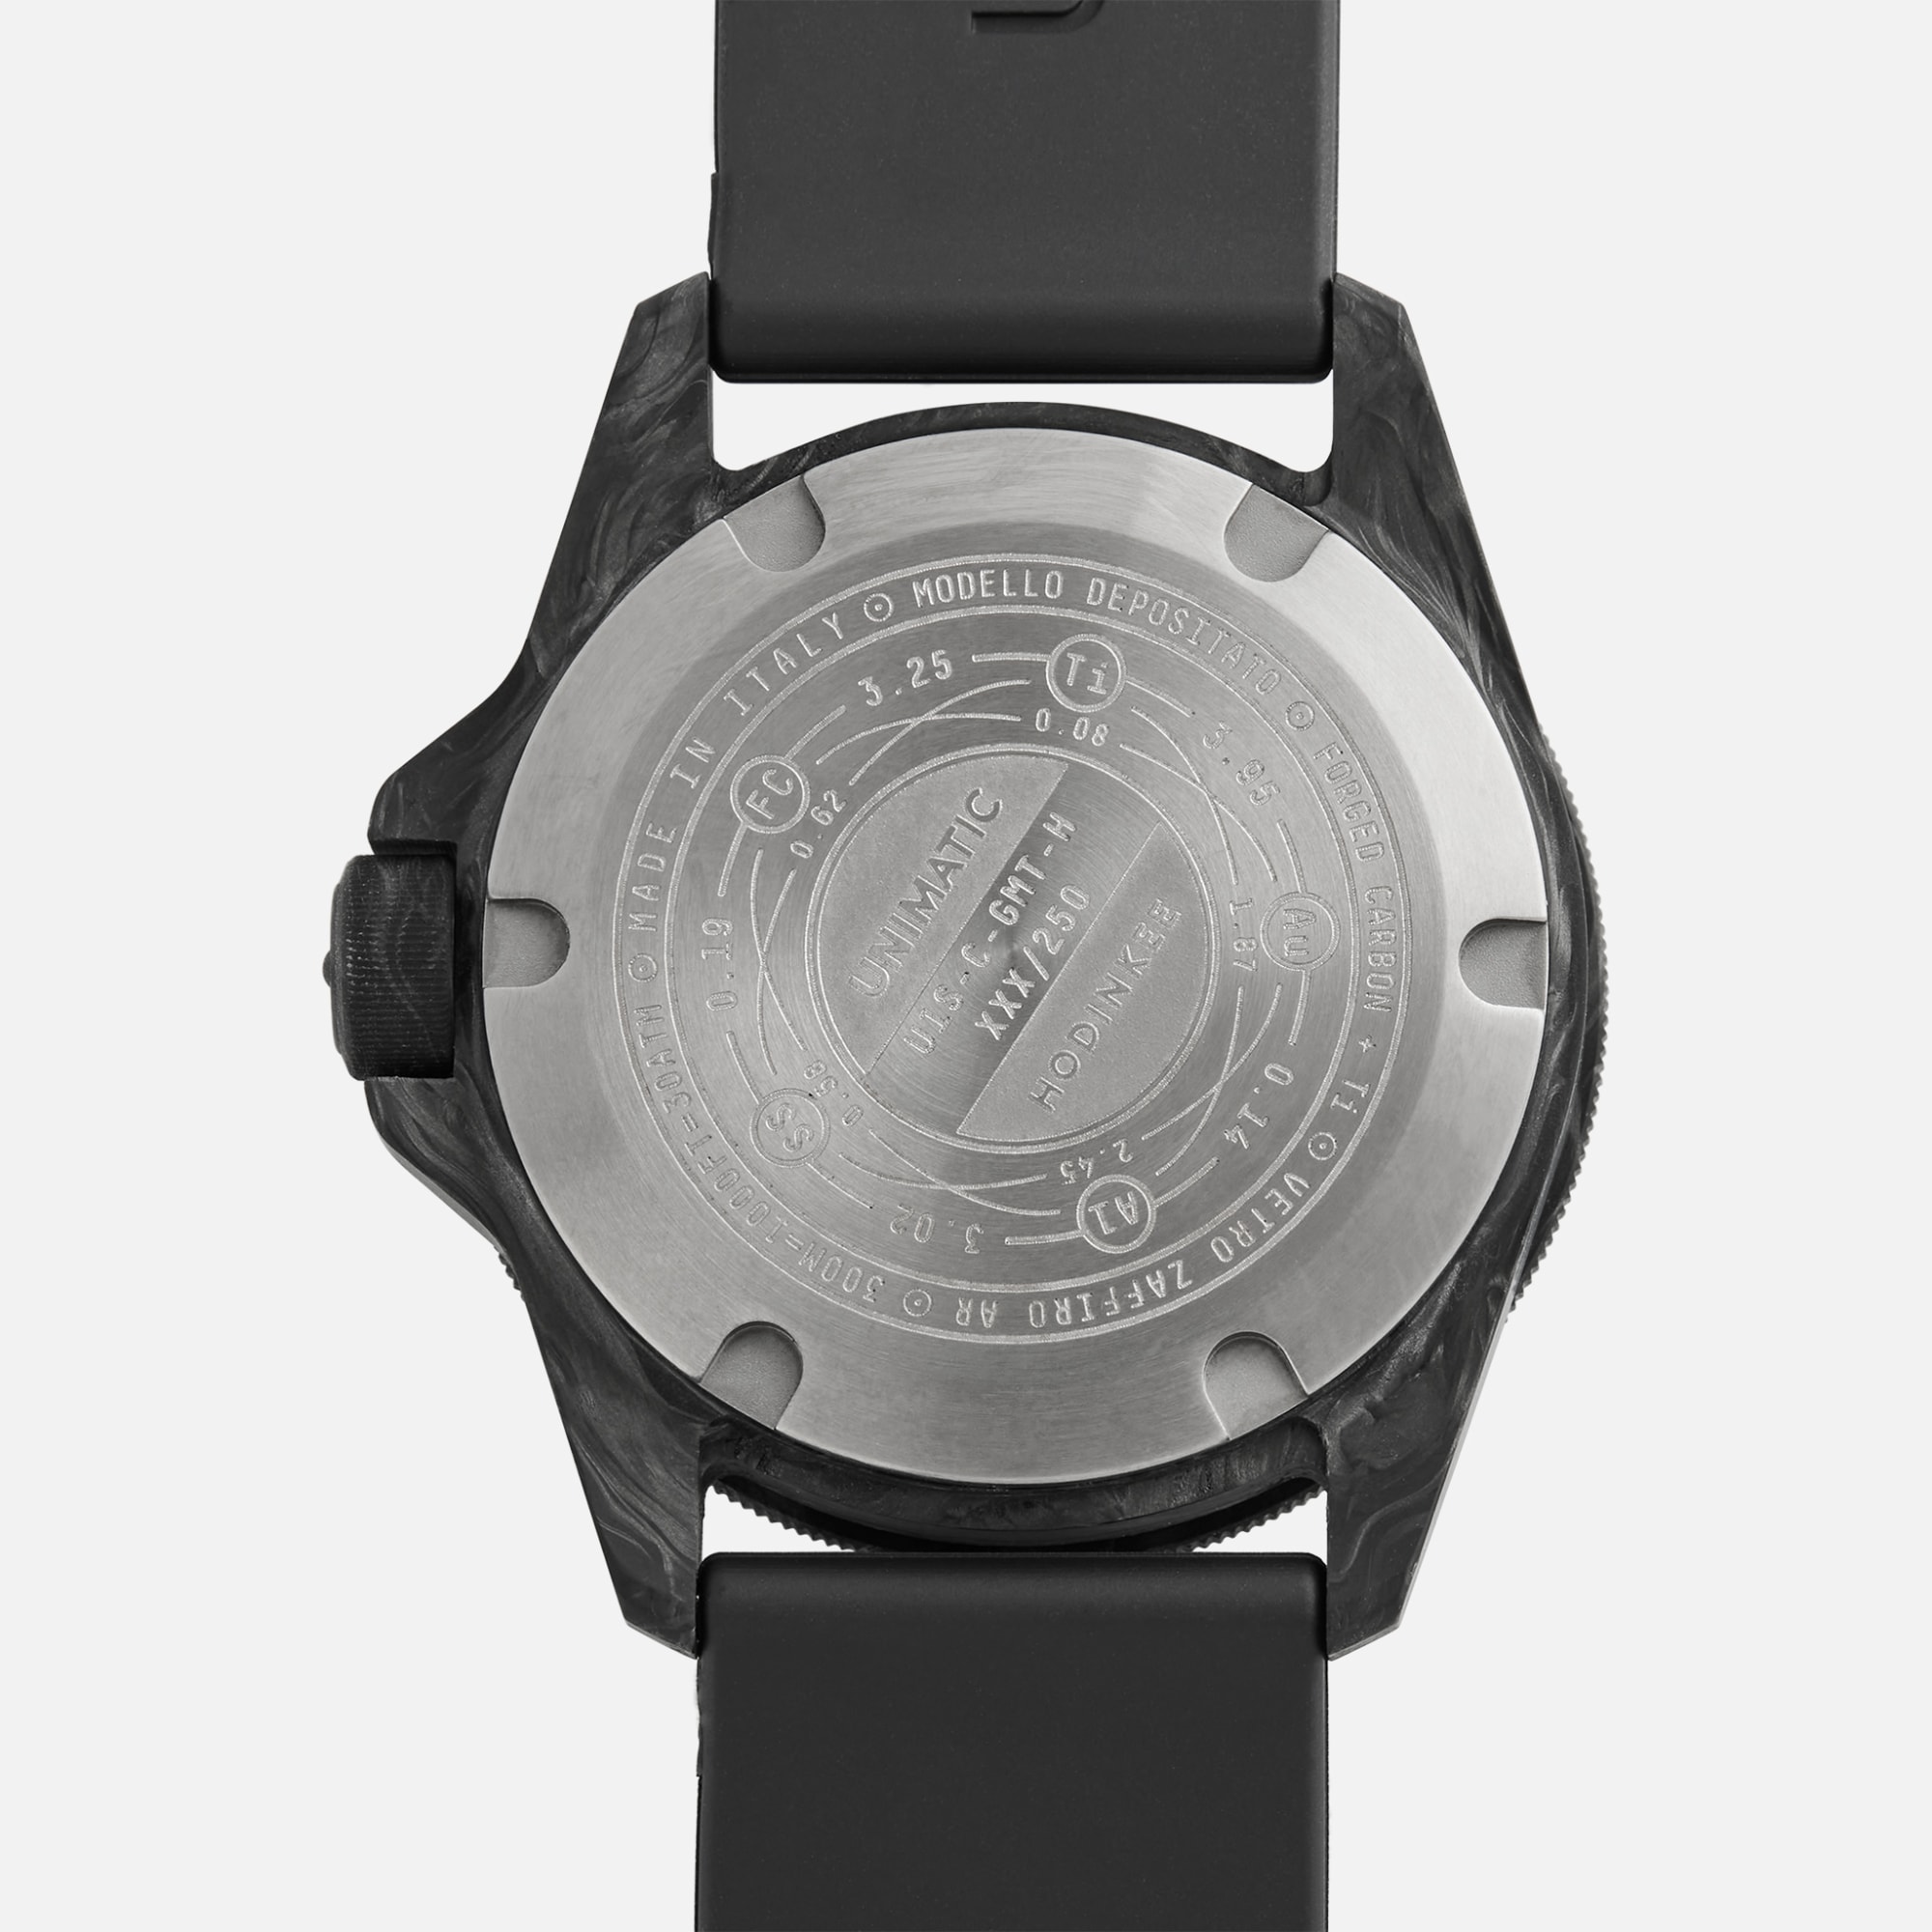 Hodinkee And Unimatic Unveil Carbon Fiber Watches Maxim 